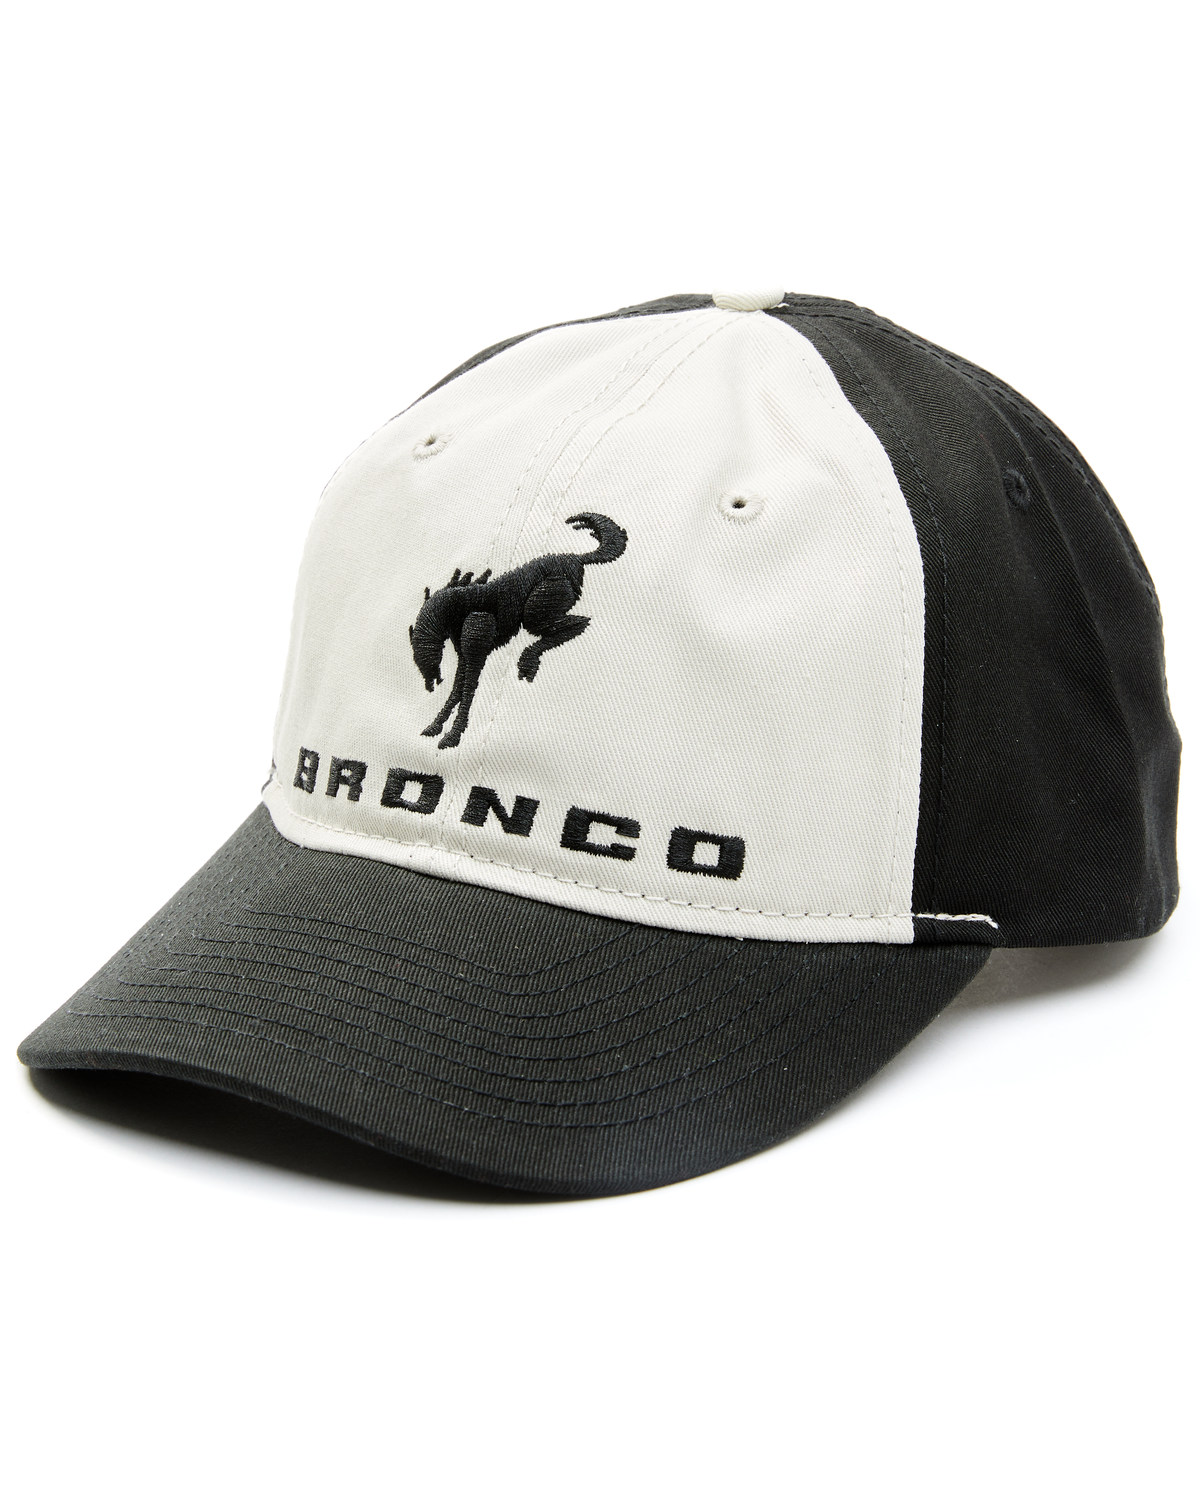 H3 Sportgear Men's Bronco Embroidered Ball Cap